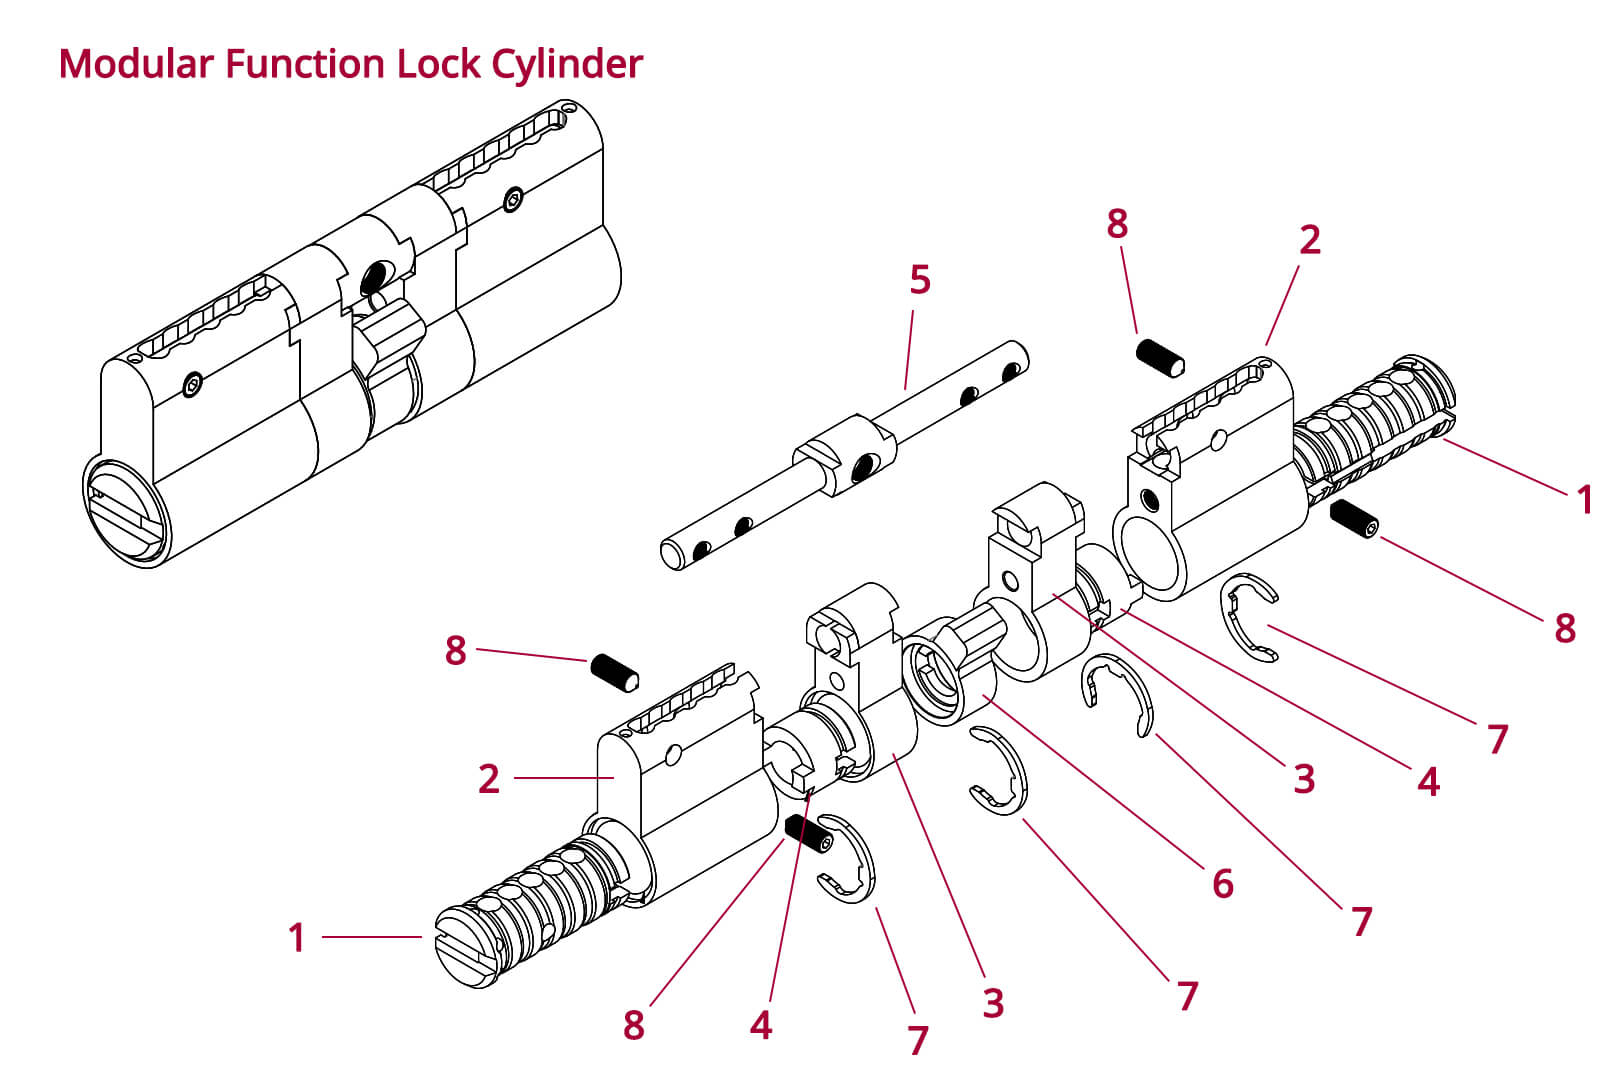 lock cylinder modular function accessories